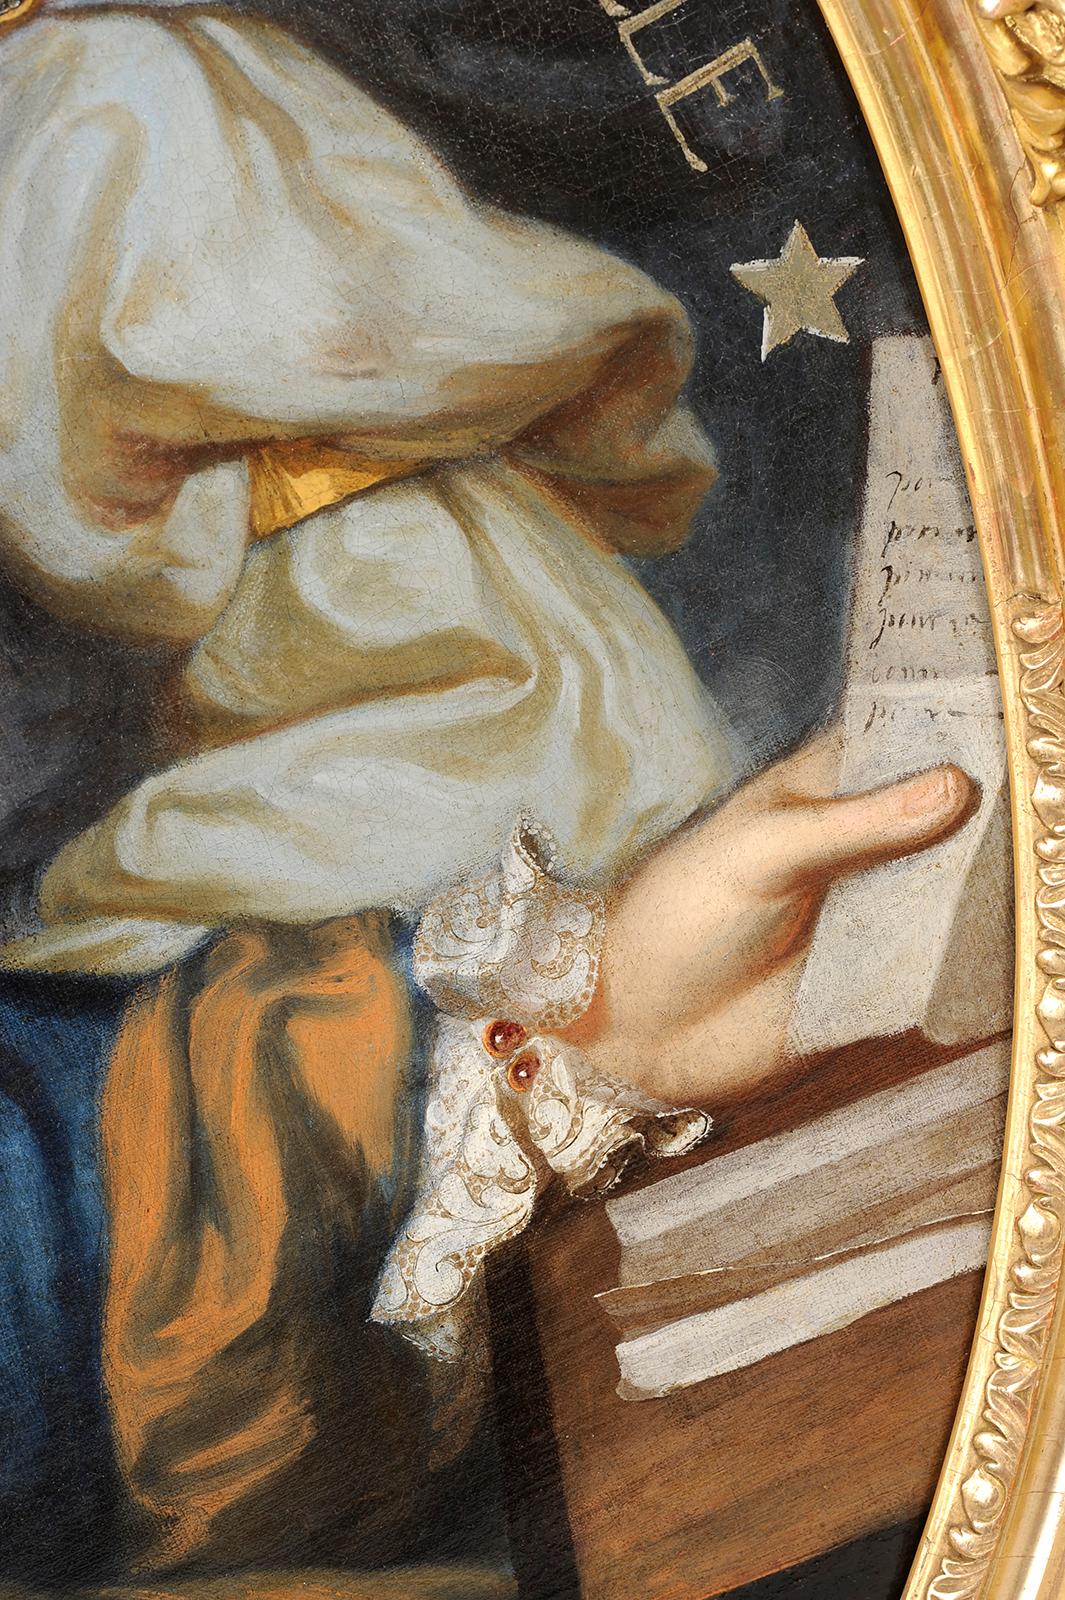 Jean-Baptiste SANTERRE
(Magny en Véxins 1651 - Paris 1717)
Portrait of a couple
Oil on original oval canvas
H. 115 cm; L. 90 cm (140 x 115 cm with frame)
Around 1695

Jean-Baptiste Santerre began his apprenticeship in 1673, under the direction of